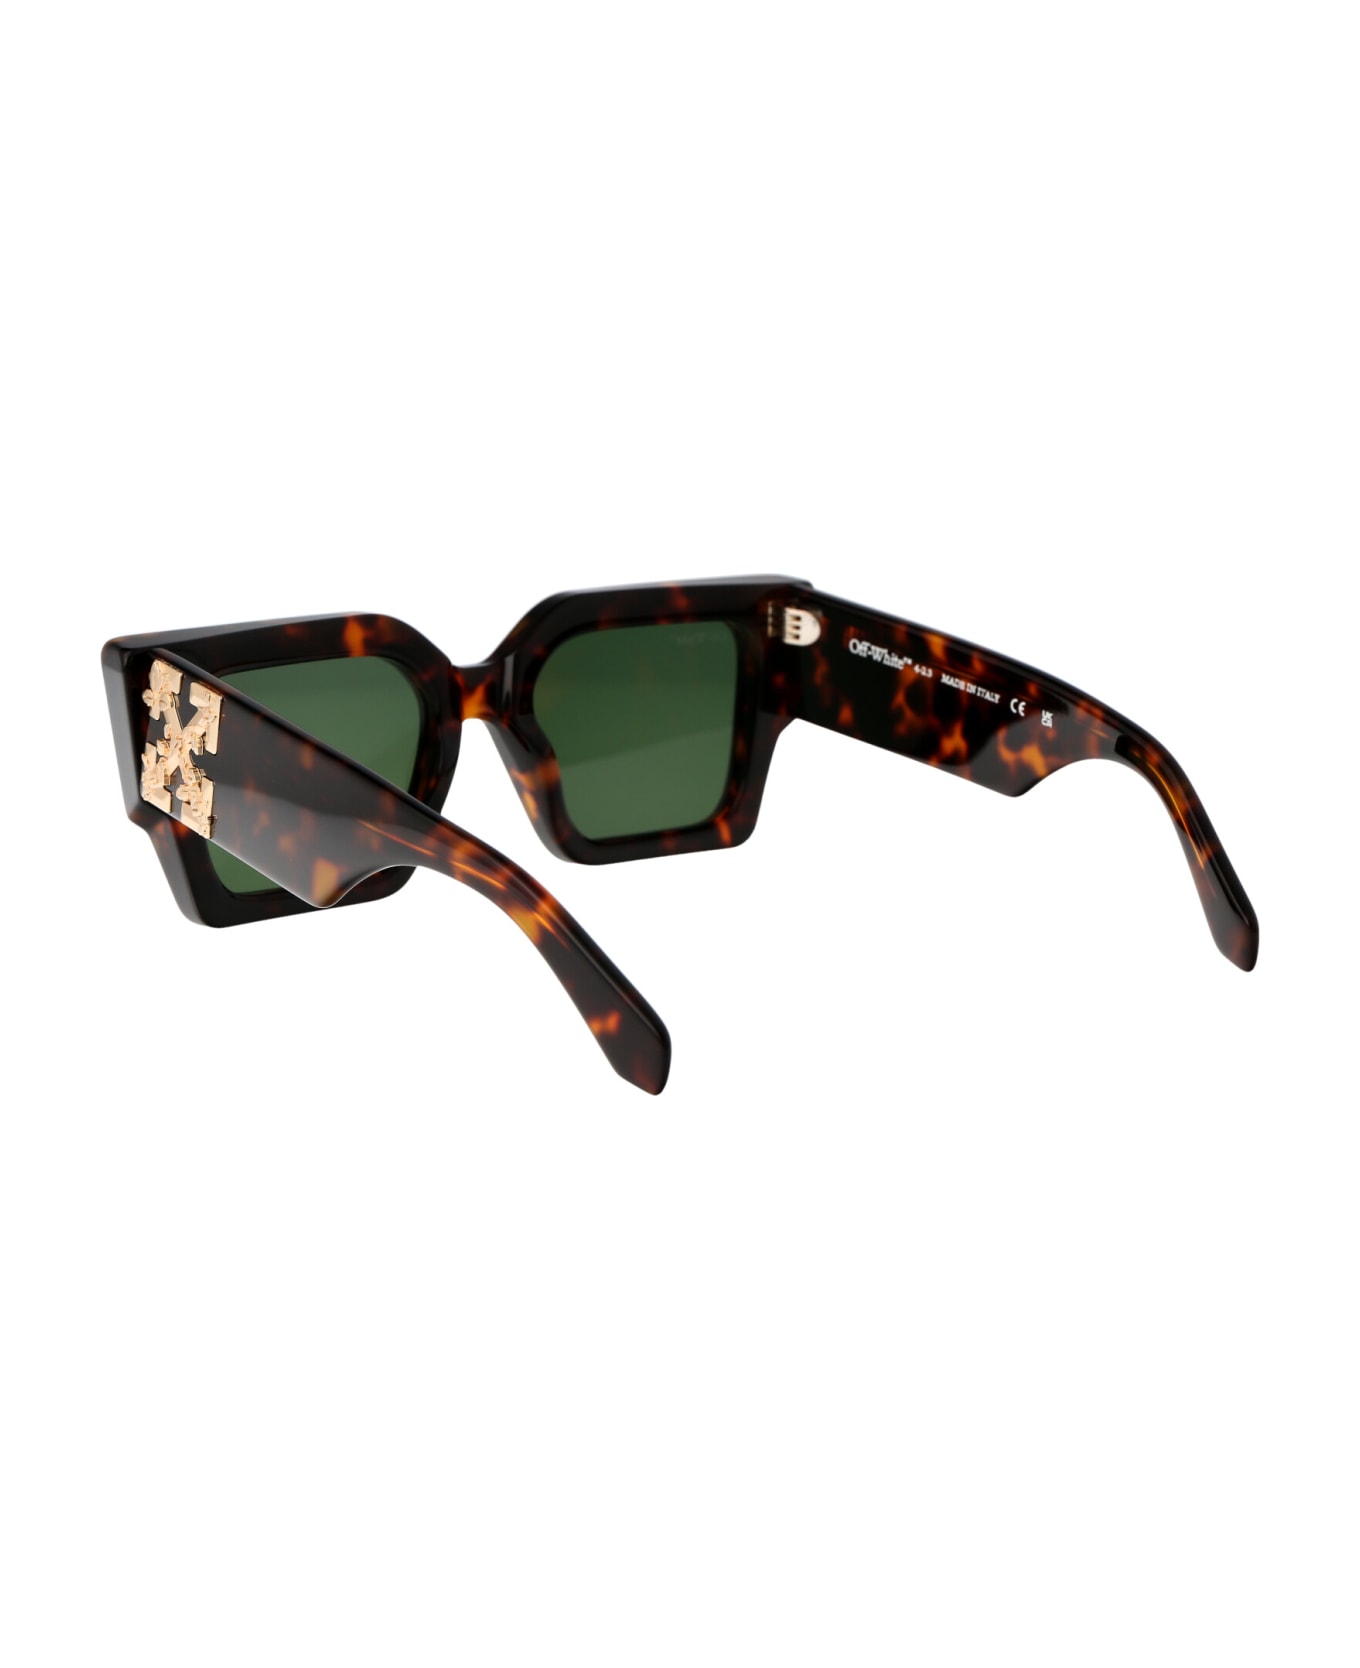 Off-White Catalina Sunglasses - 6055 HAVANA